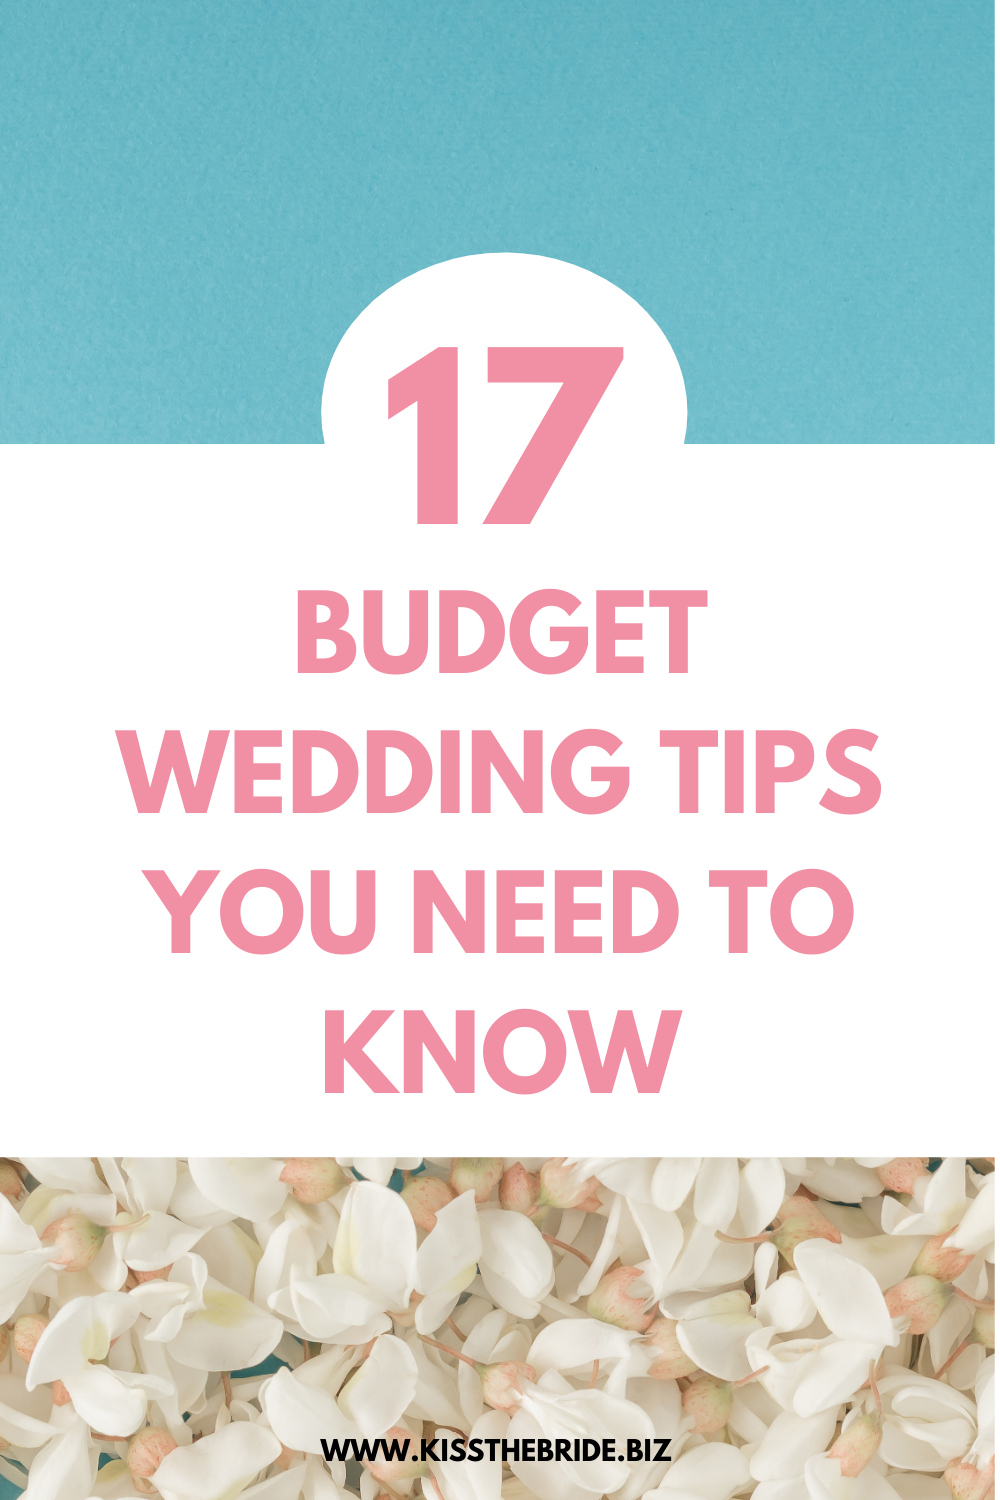 Budget Wedding tips and advice